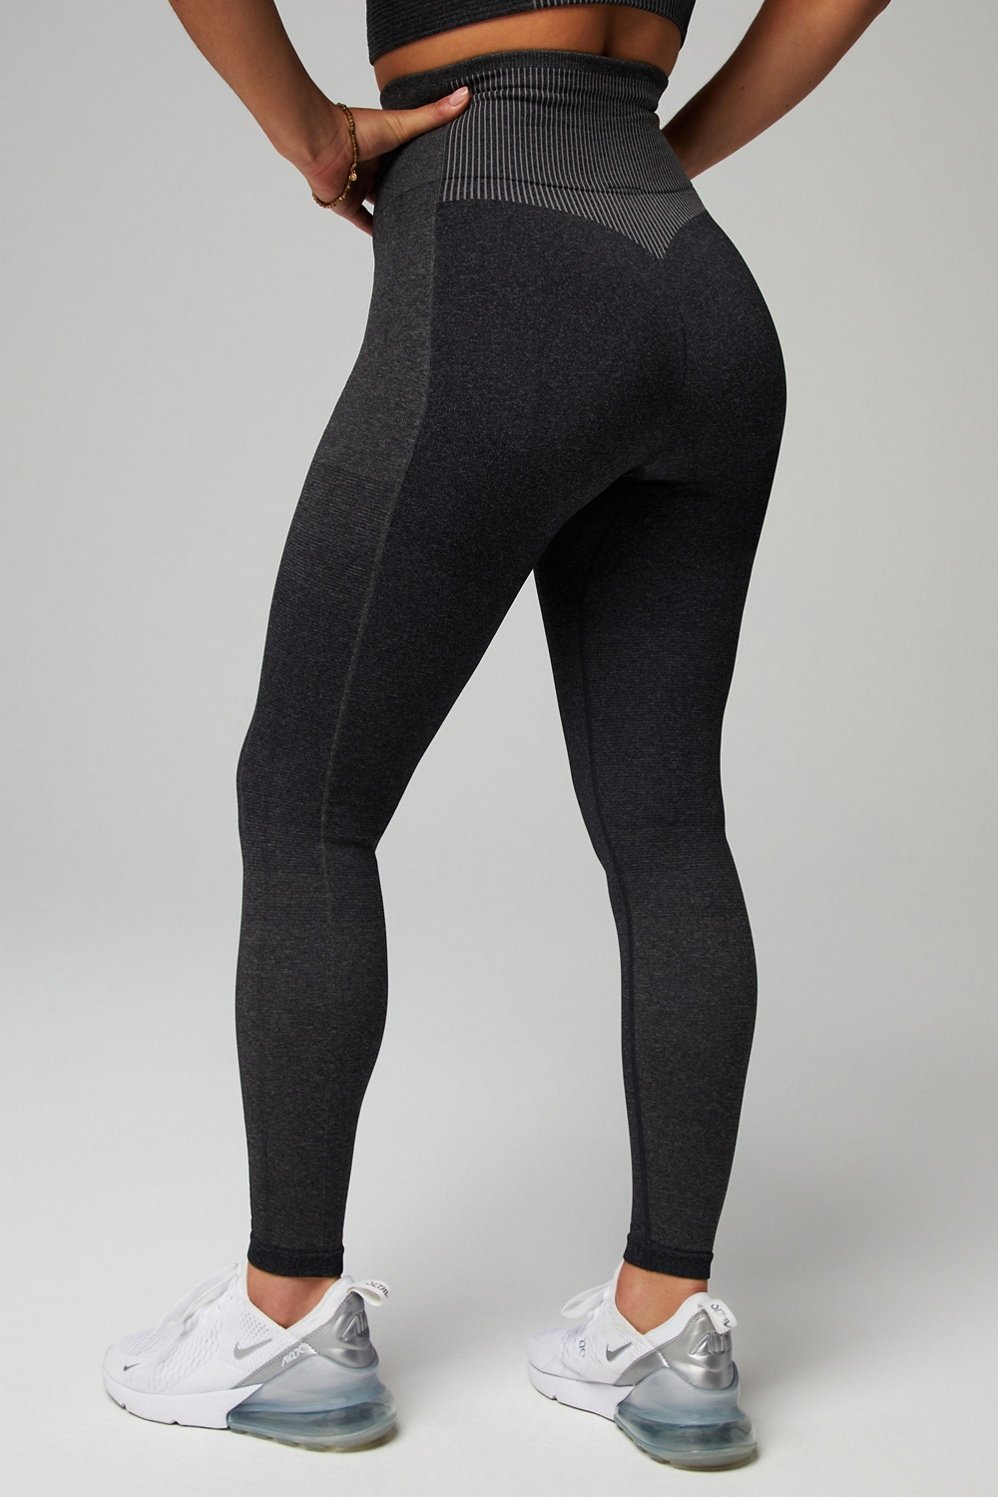 Womens Black Stripe Printed Sport Athletic Yoga Leggings Pants -  Beautifulhalo.com